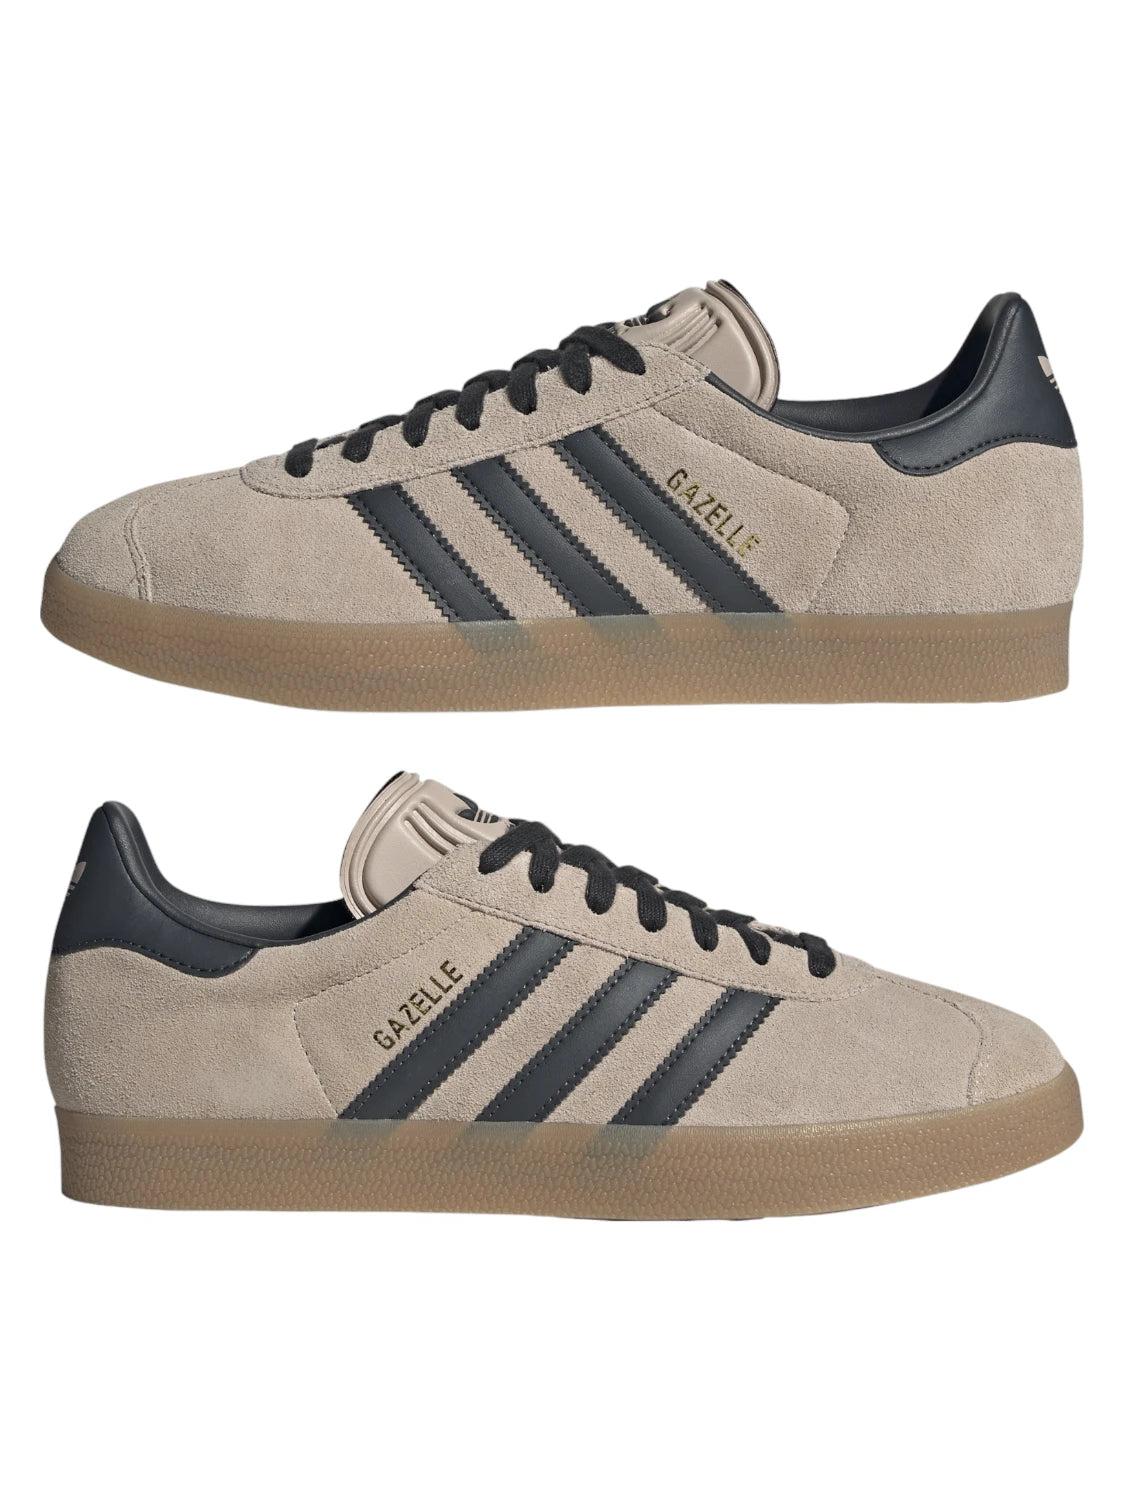 Adidas Gazelle-Adidas Originals-Sneakers-Vittorio Citro Boutique